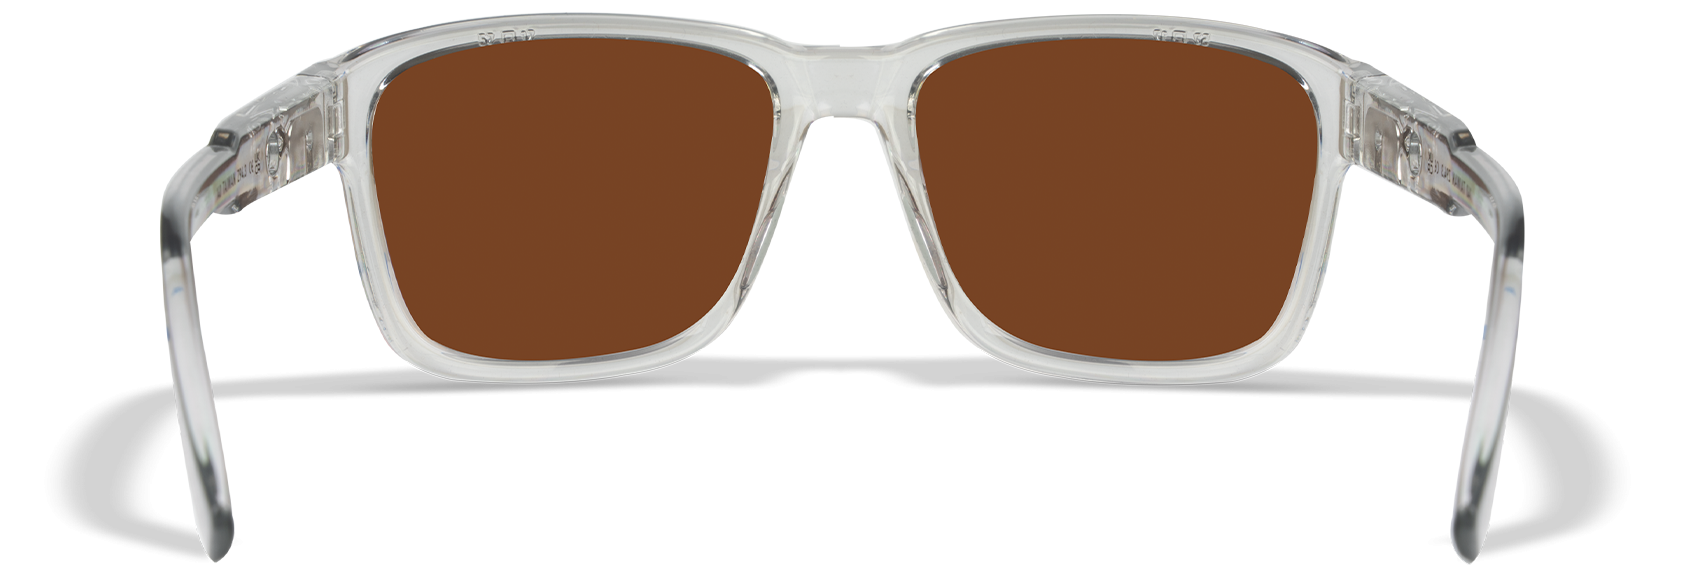 Wiley X Trek Sunglasses, 2 colors